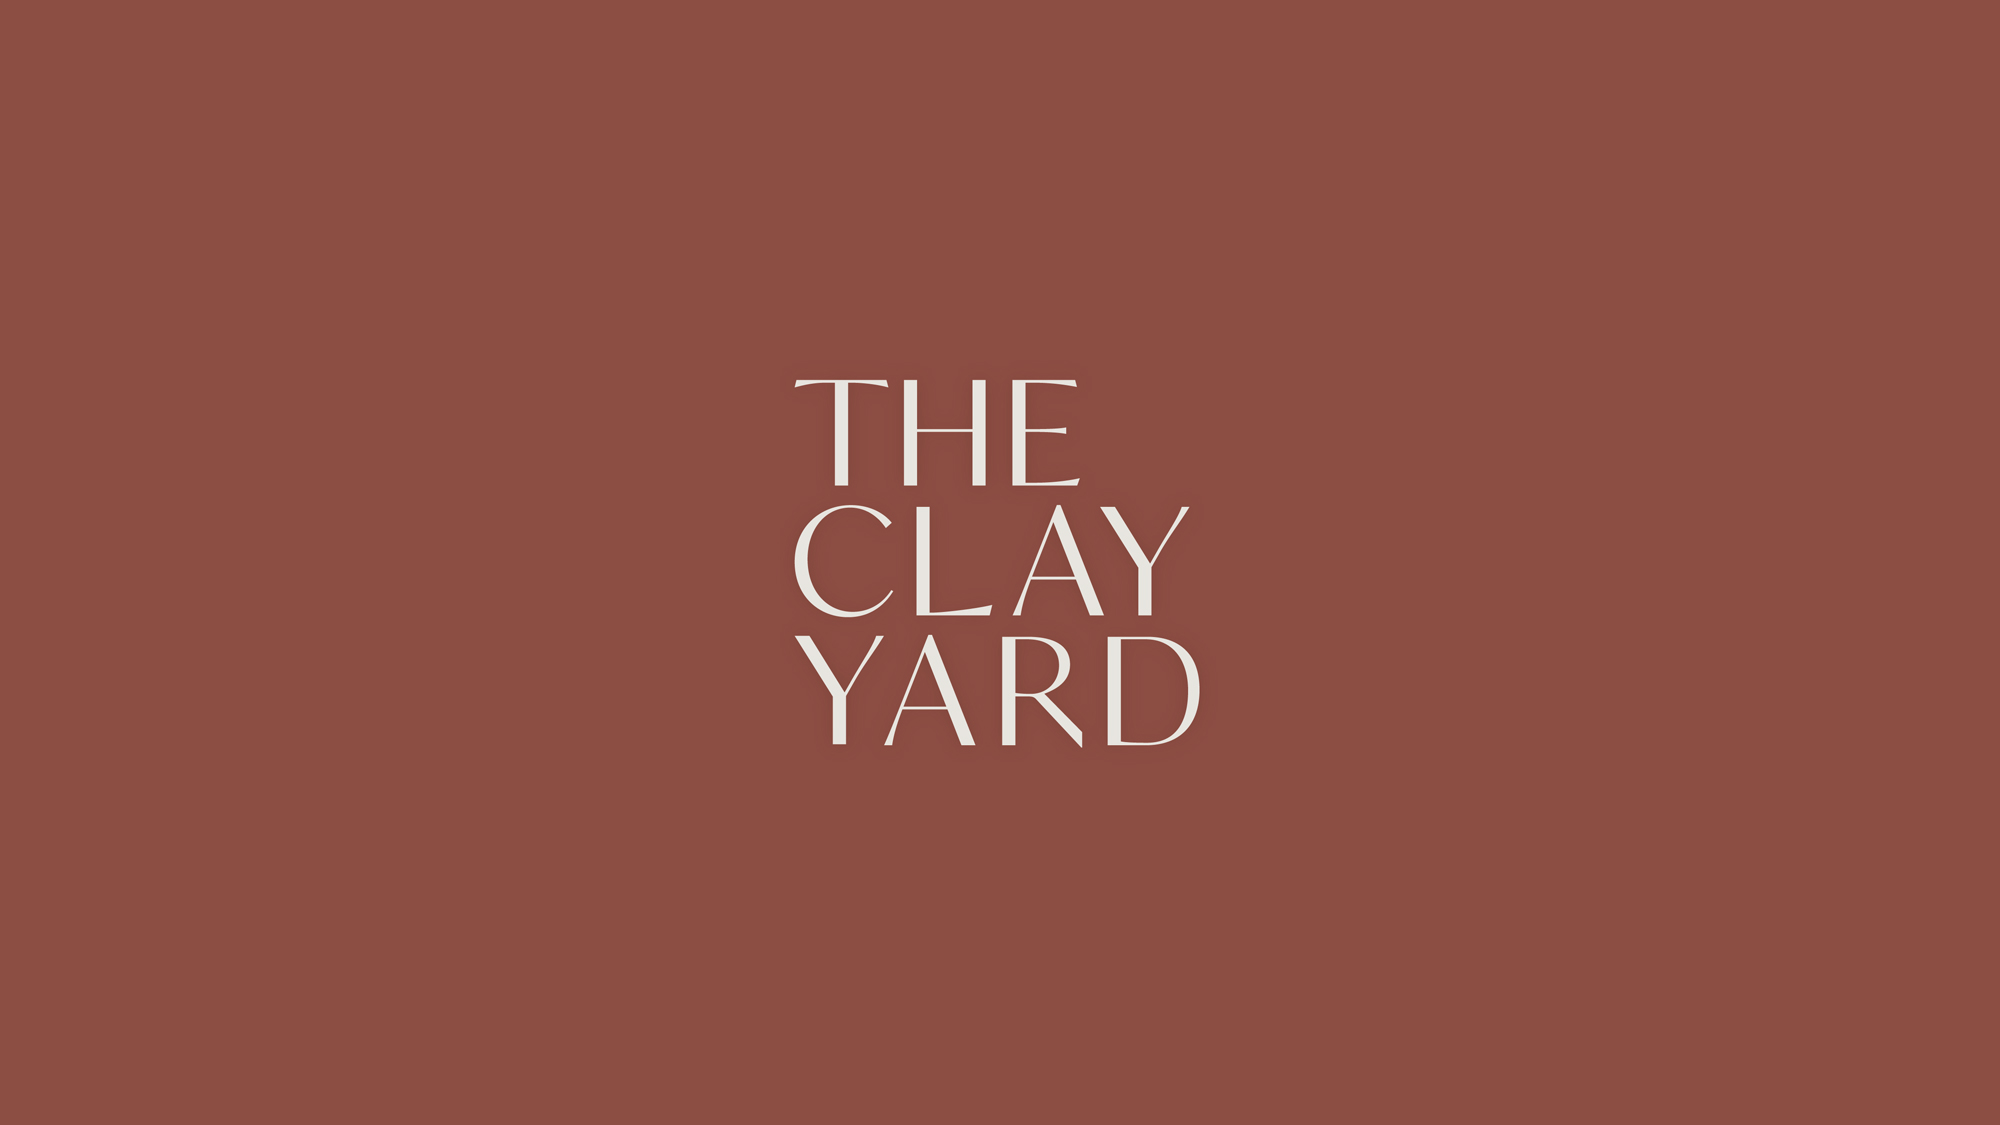 Coming soon: The Clay Yard